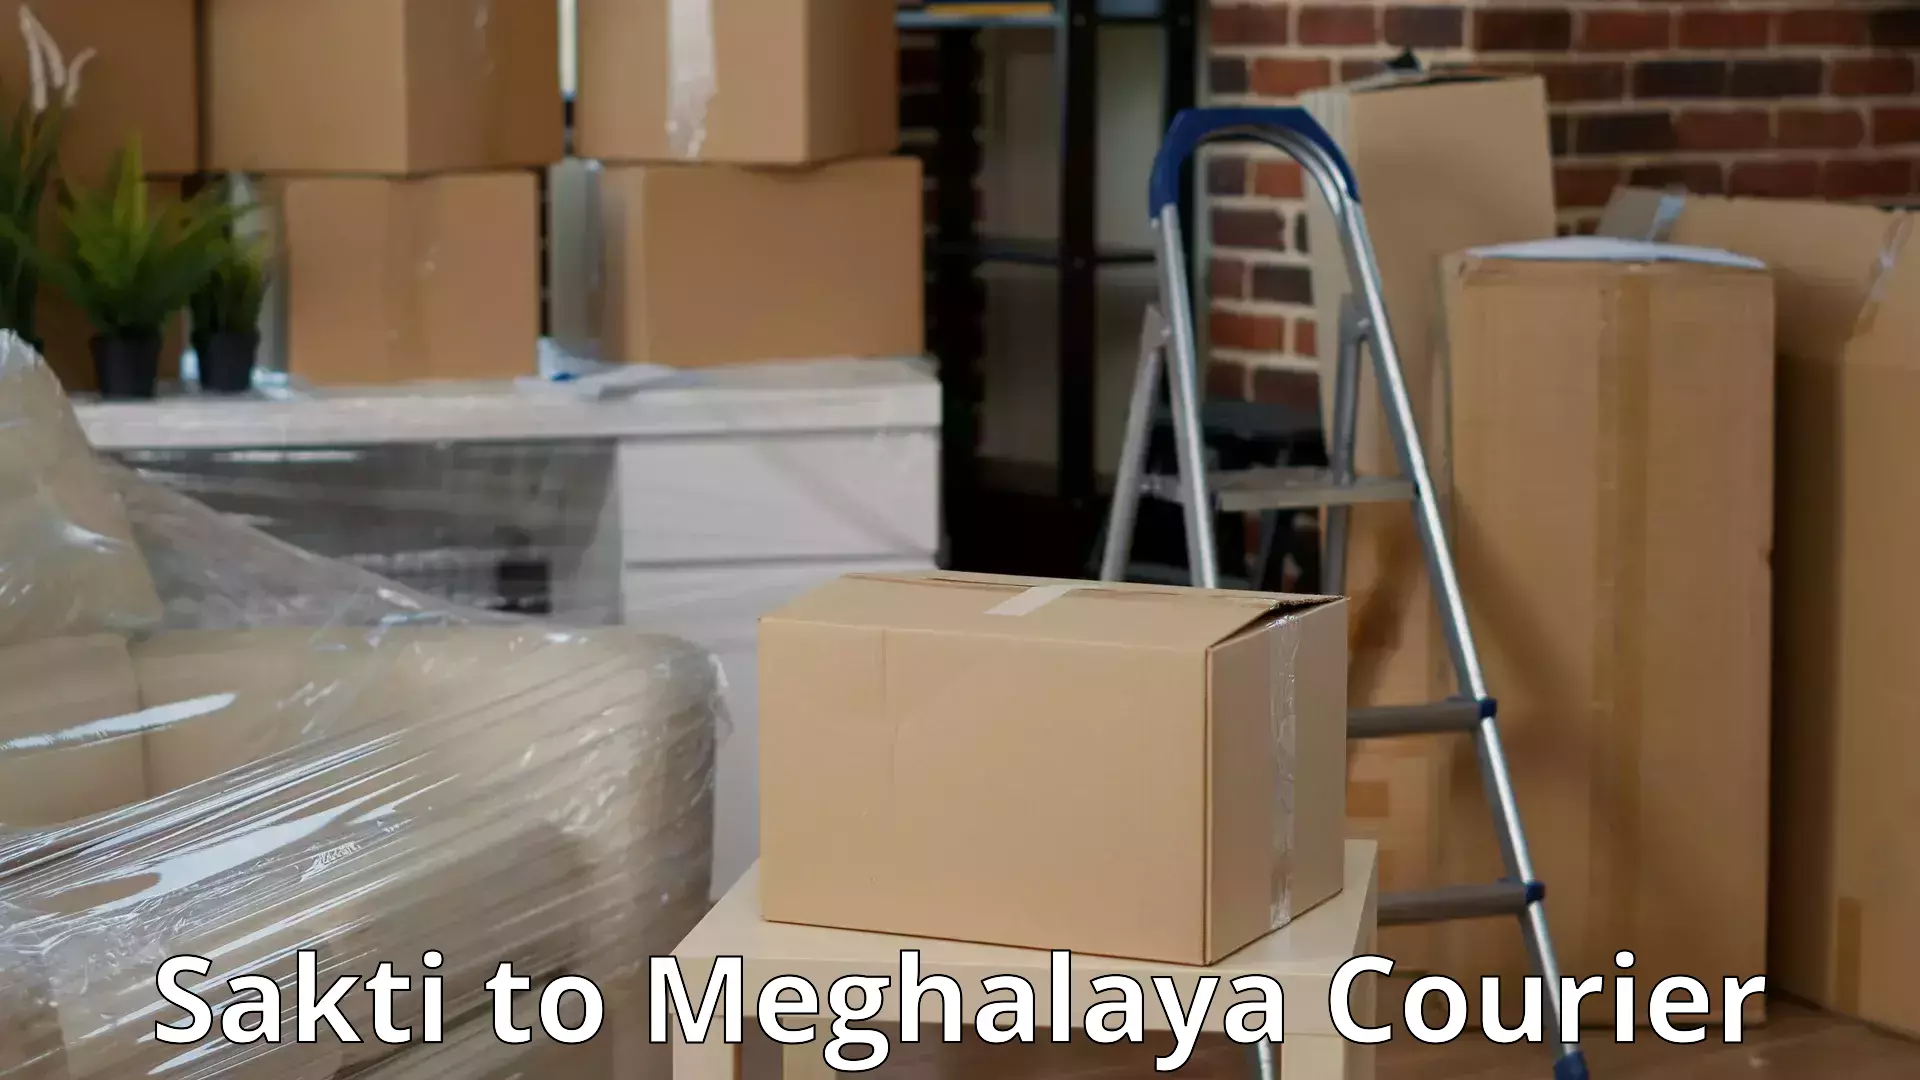 Trusted moving company Sakti to Meghalaya